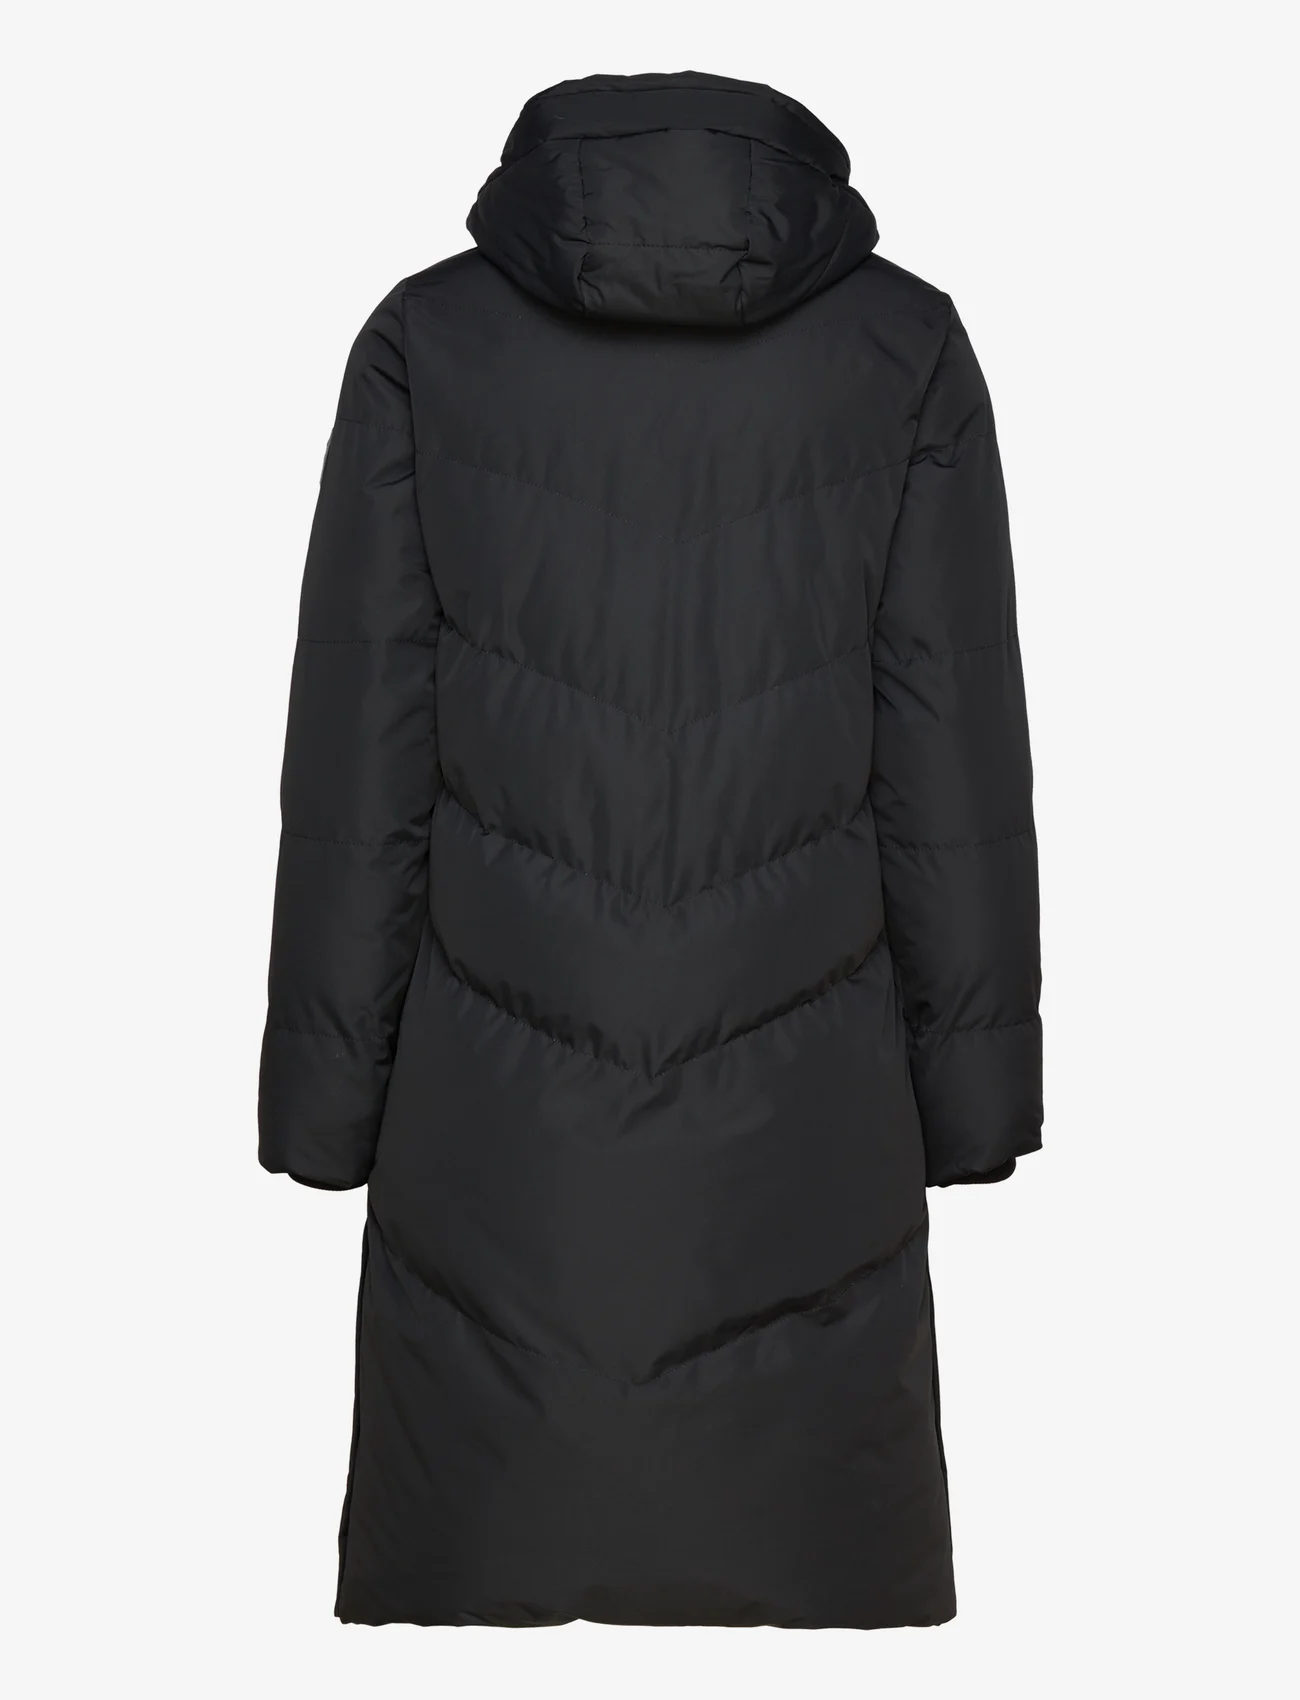 Garcia - ladies outdoor jackets - winterjassen - black - 1